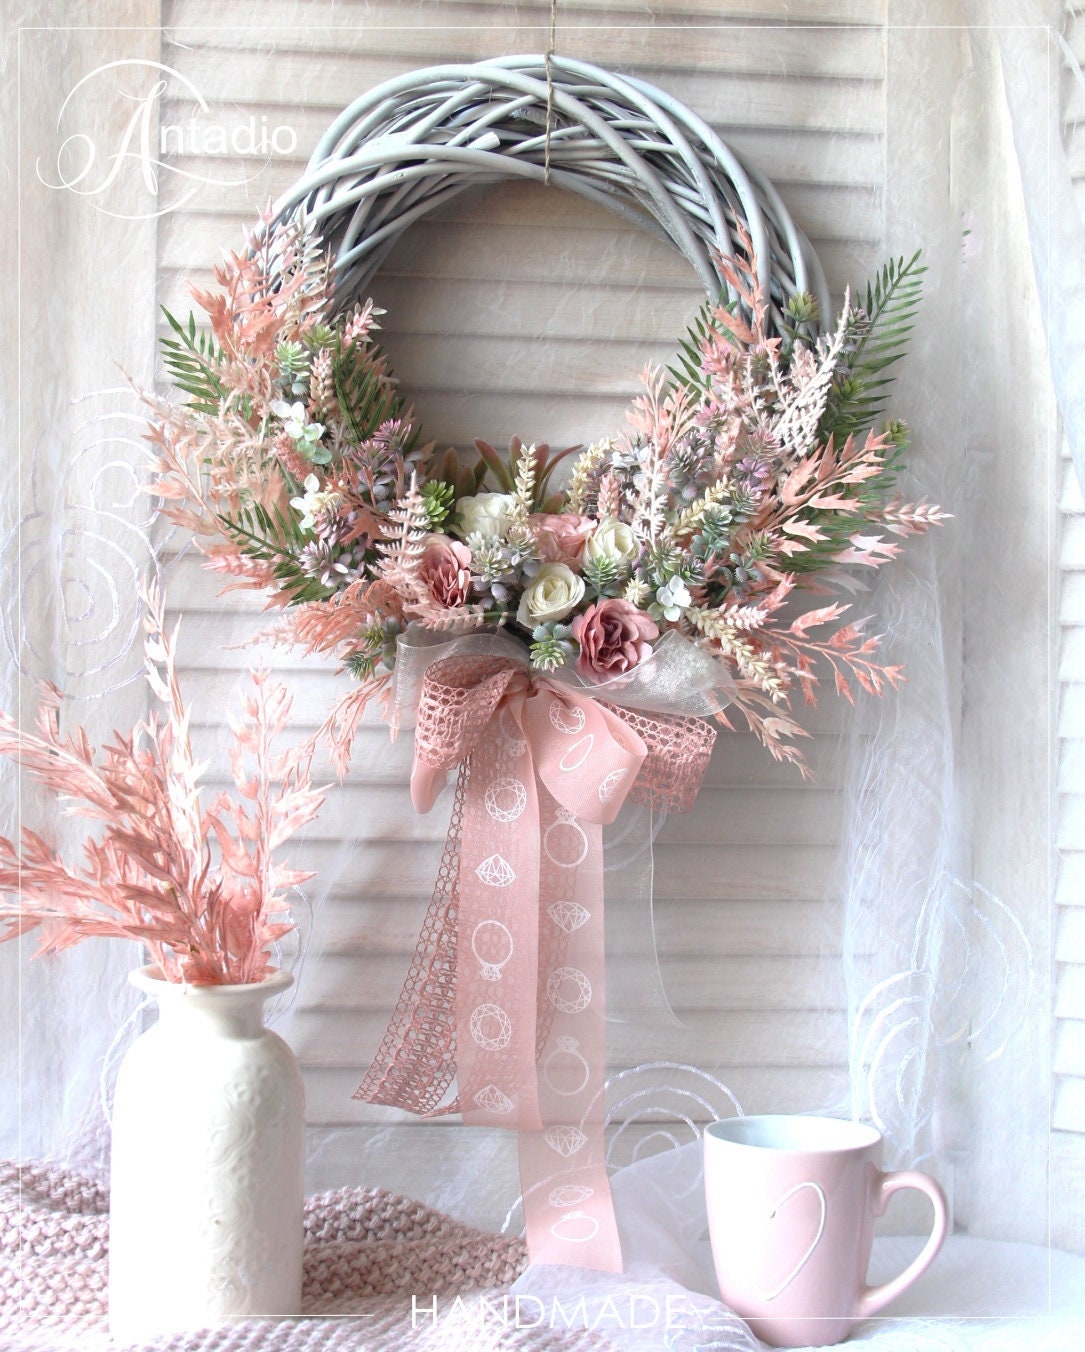 25cm 30cm Polystyrene Round Wreath Rings High Quality Crafts Wedding DIY  Florist Arrangements Christmas Door Wreath 